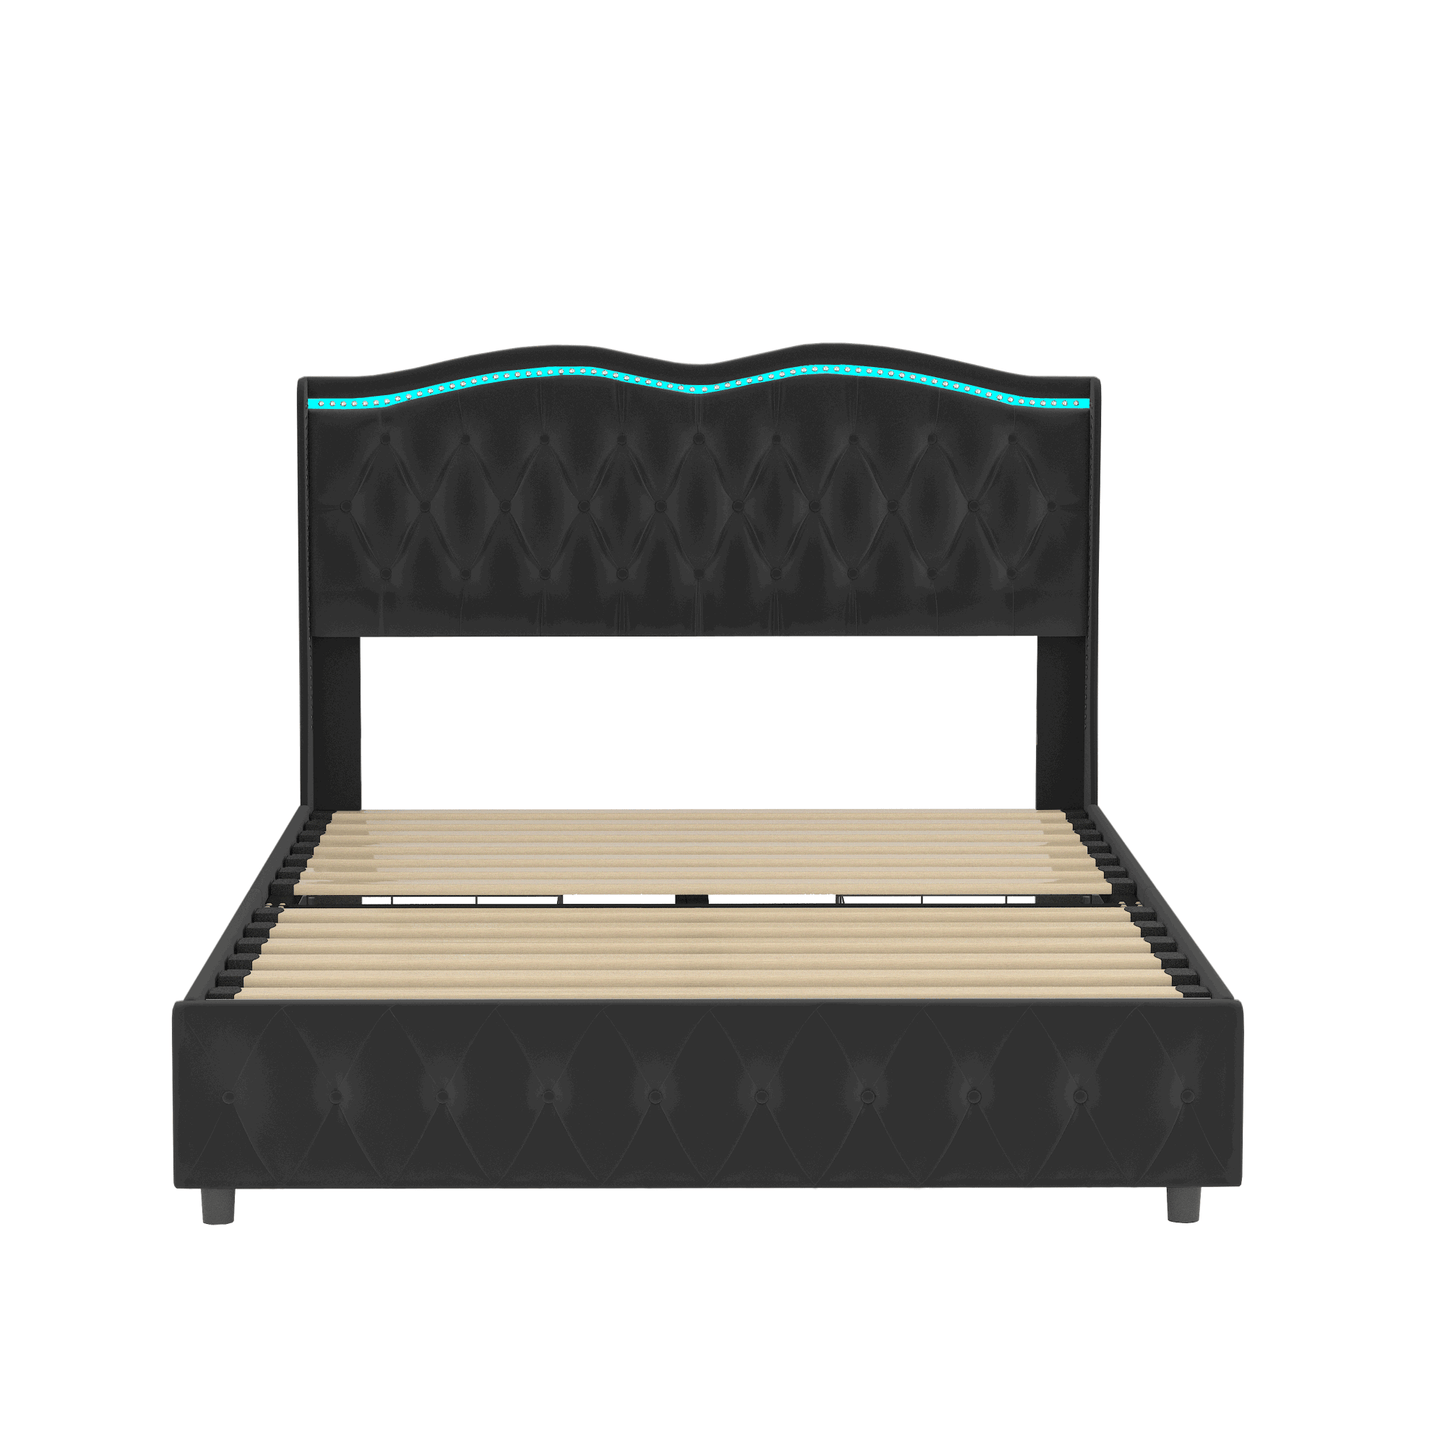 velvet upholstered bed with adjustable colorful led light decorative headboard & storage 4 drawers, black